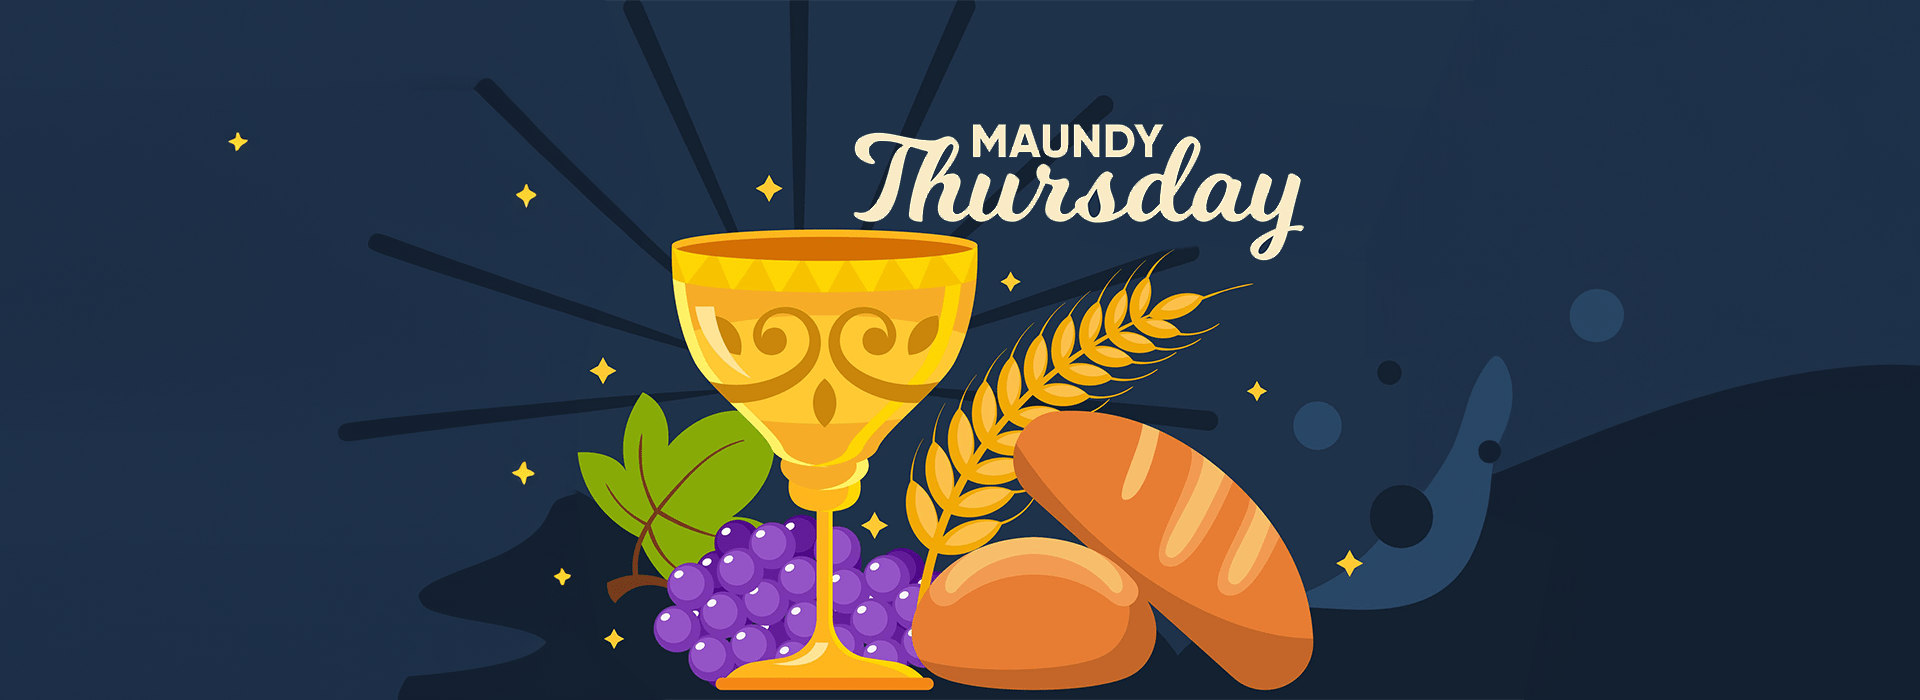 Maundy Thursday1